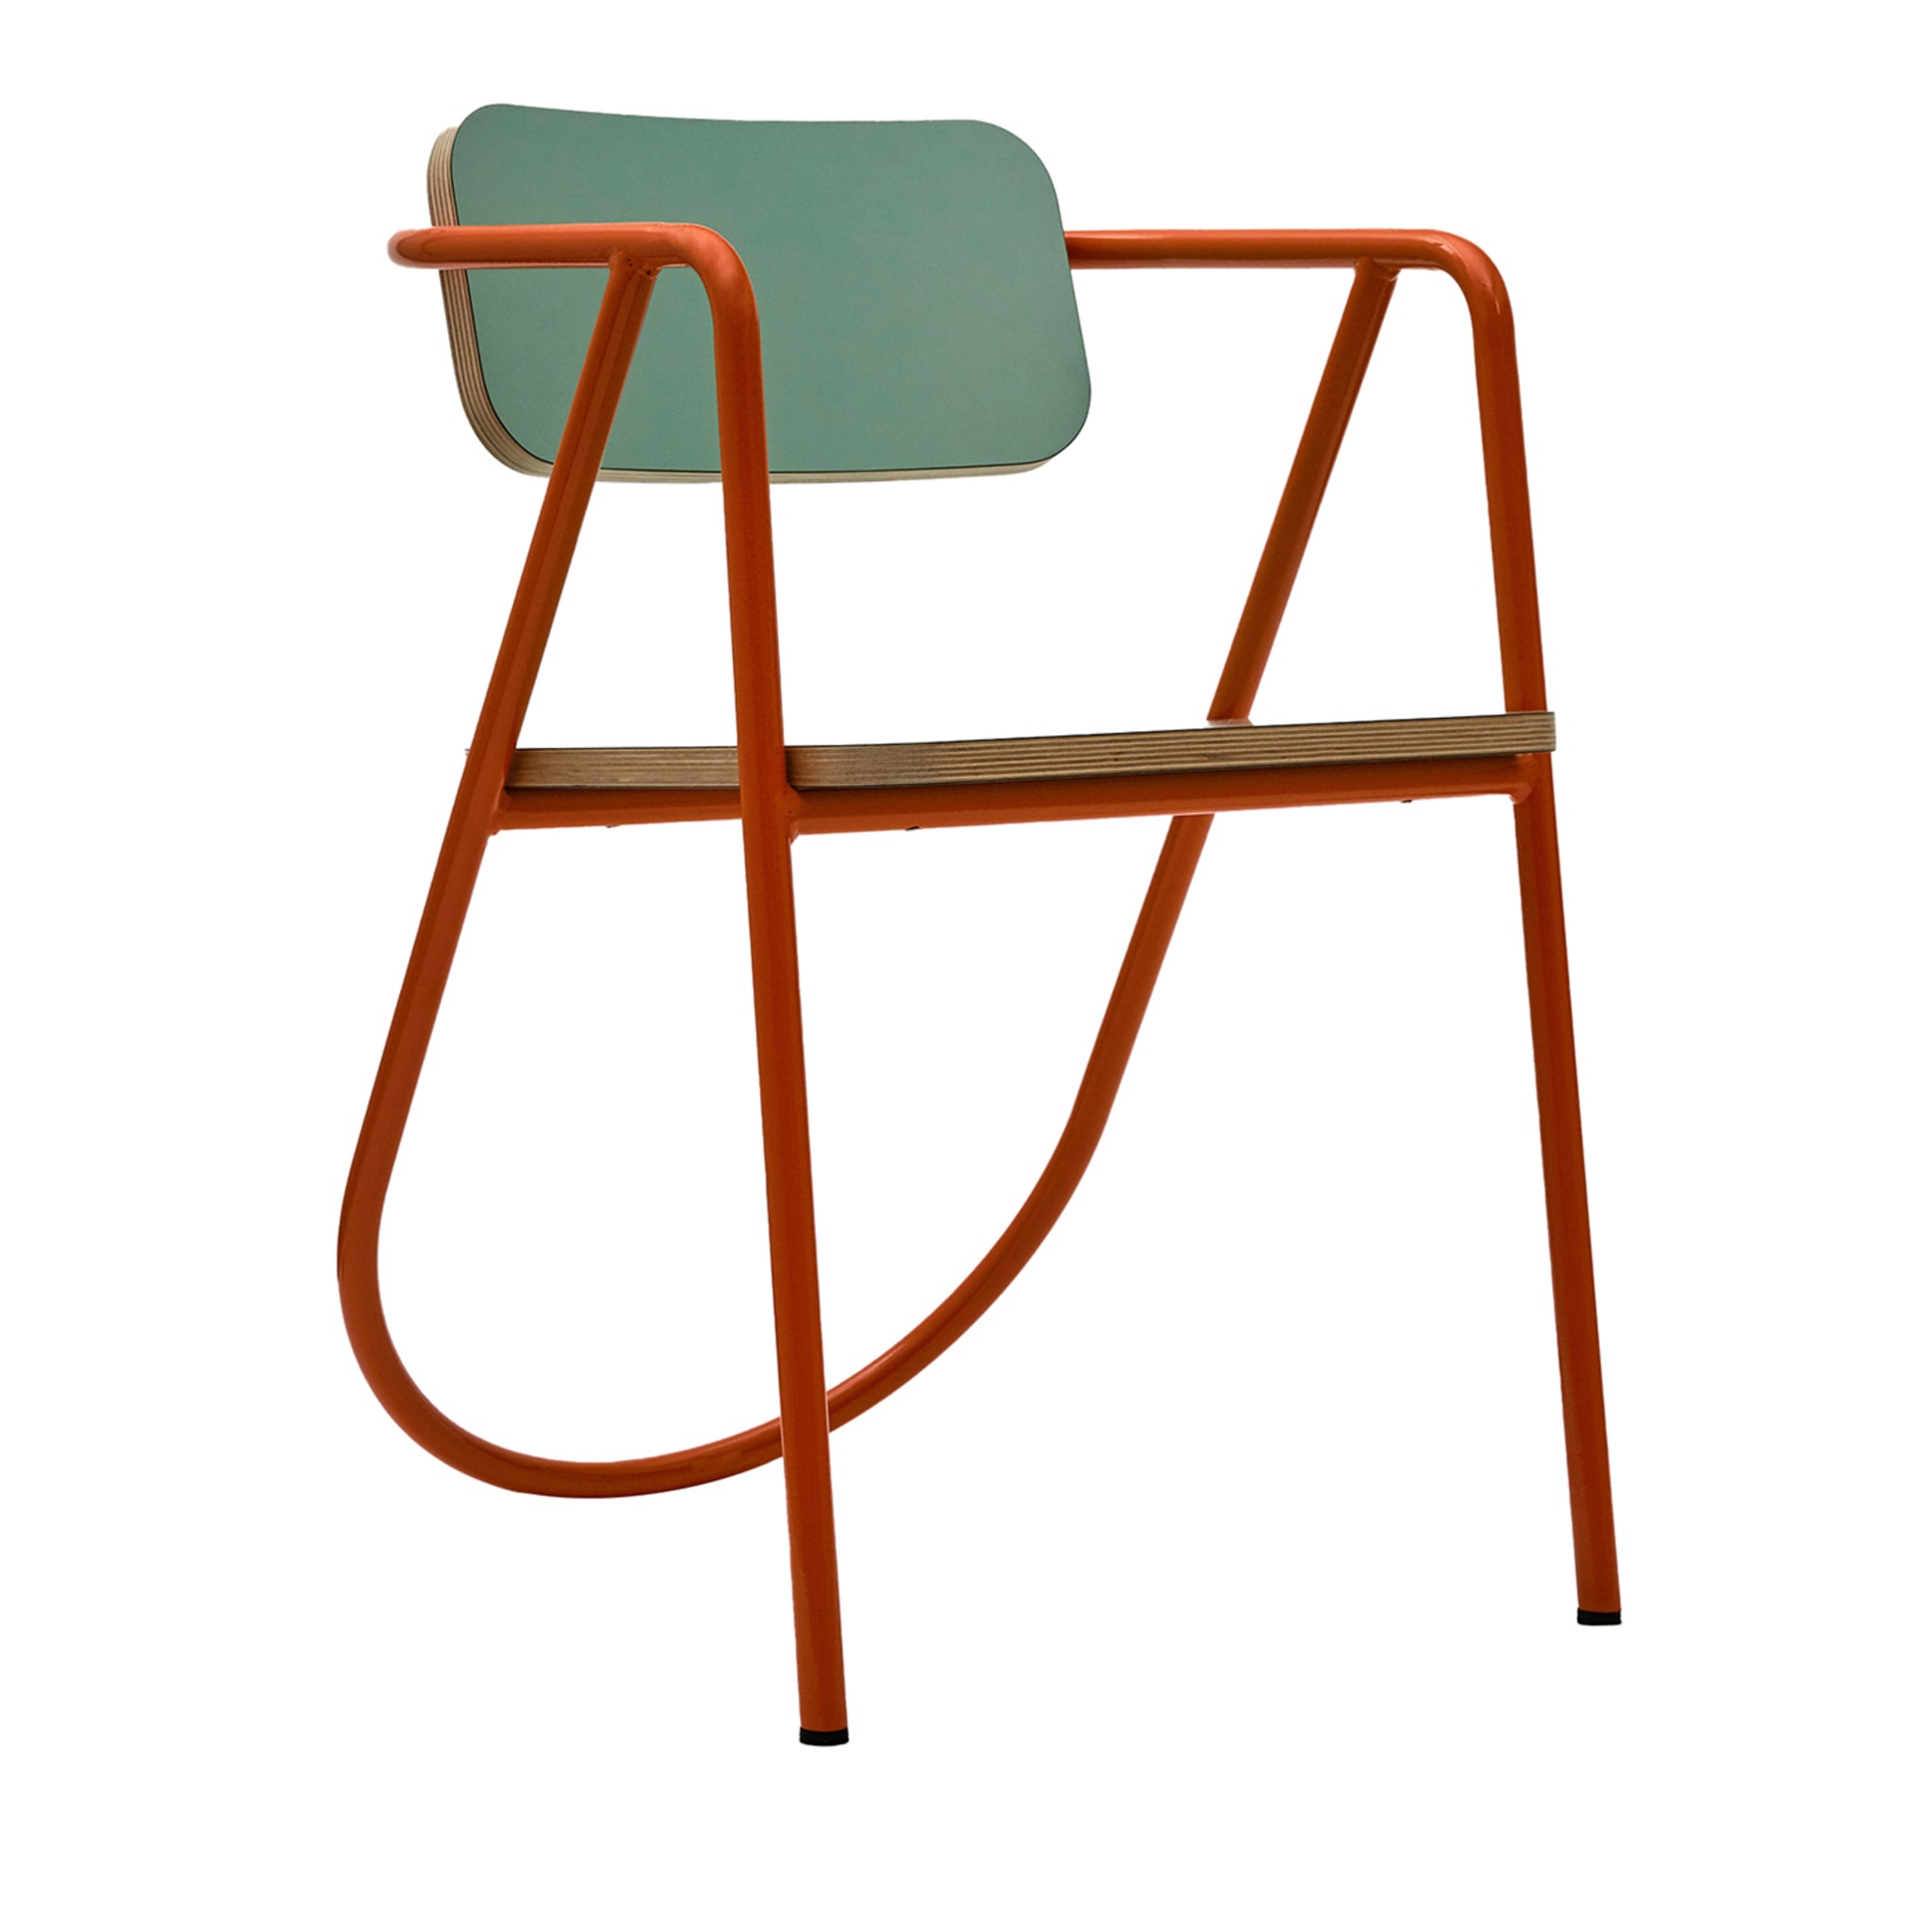 La Misciù Orange & Teal Chair - Main view